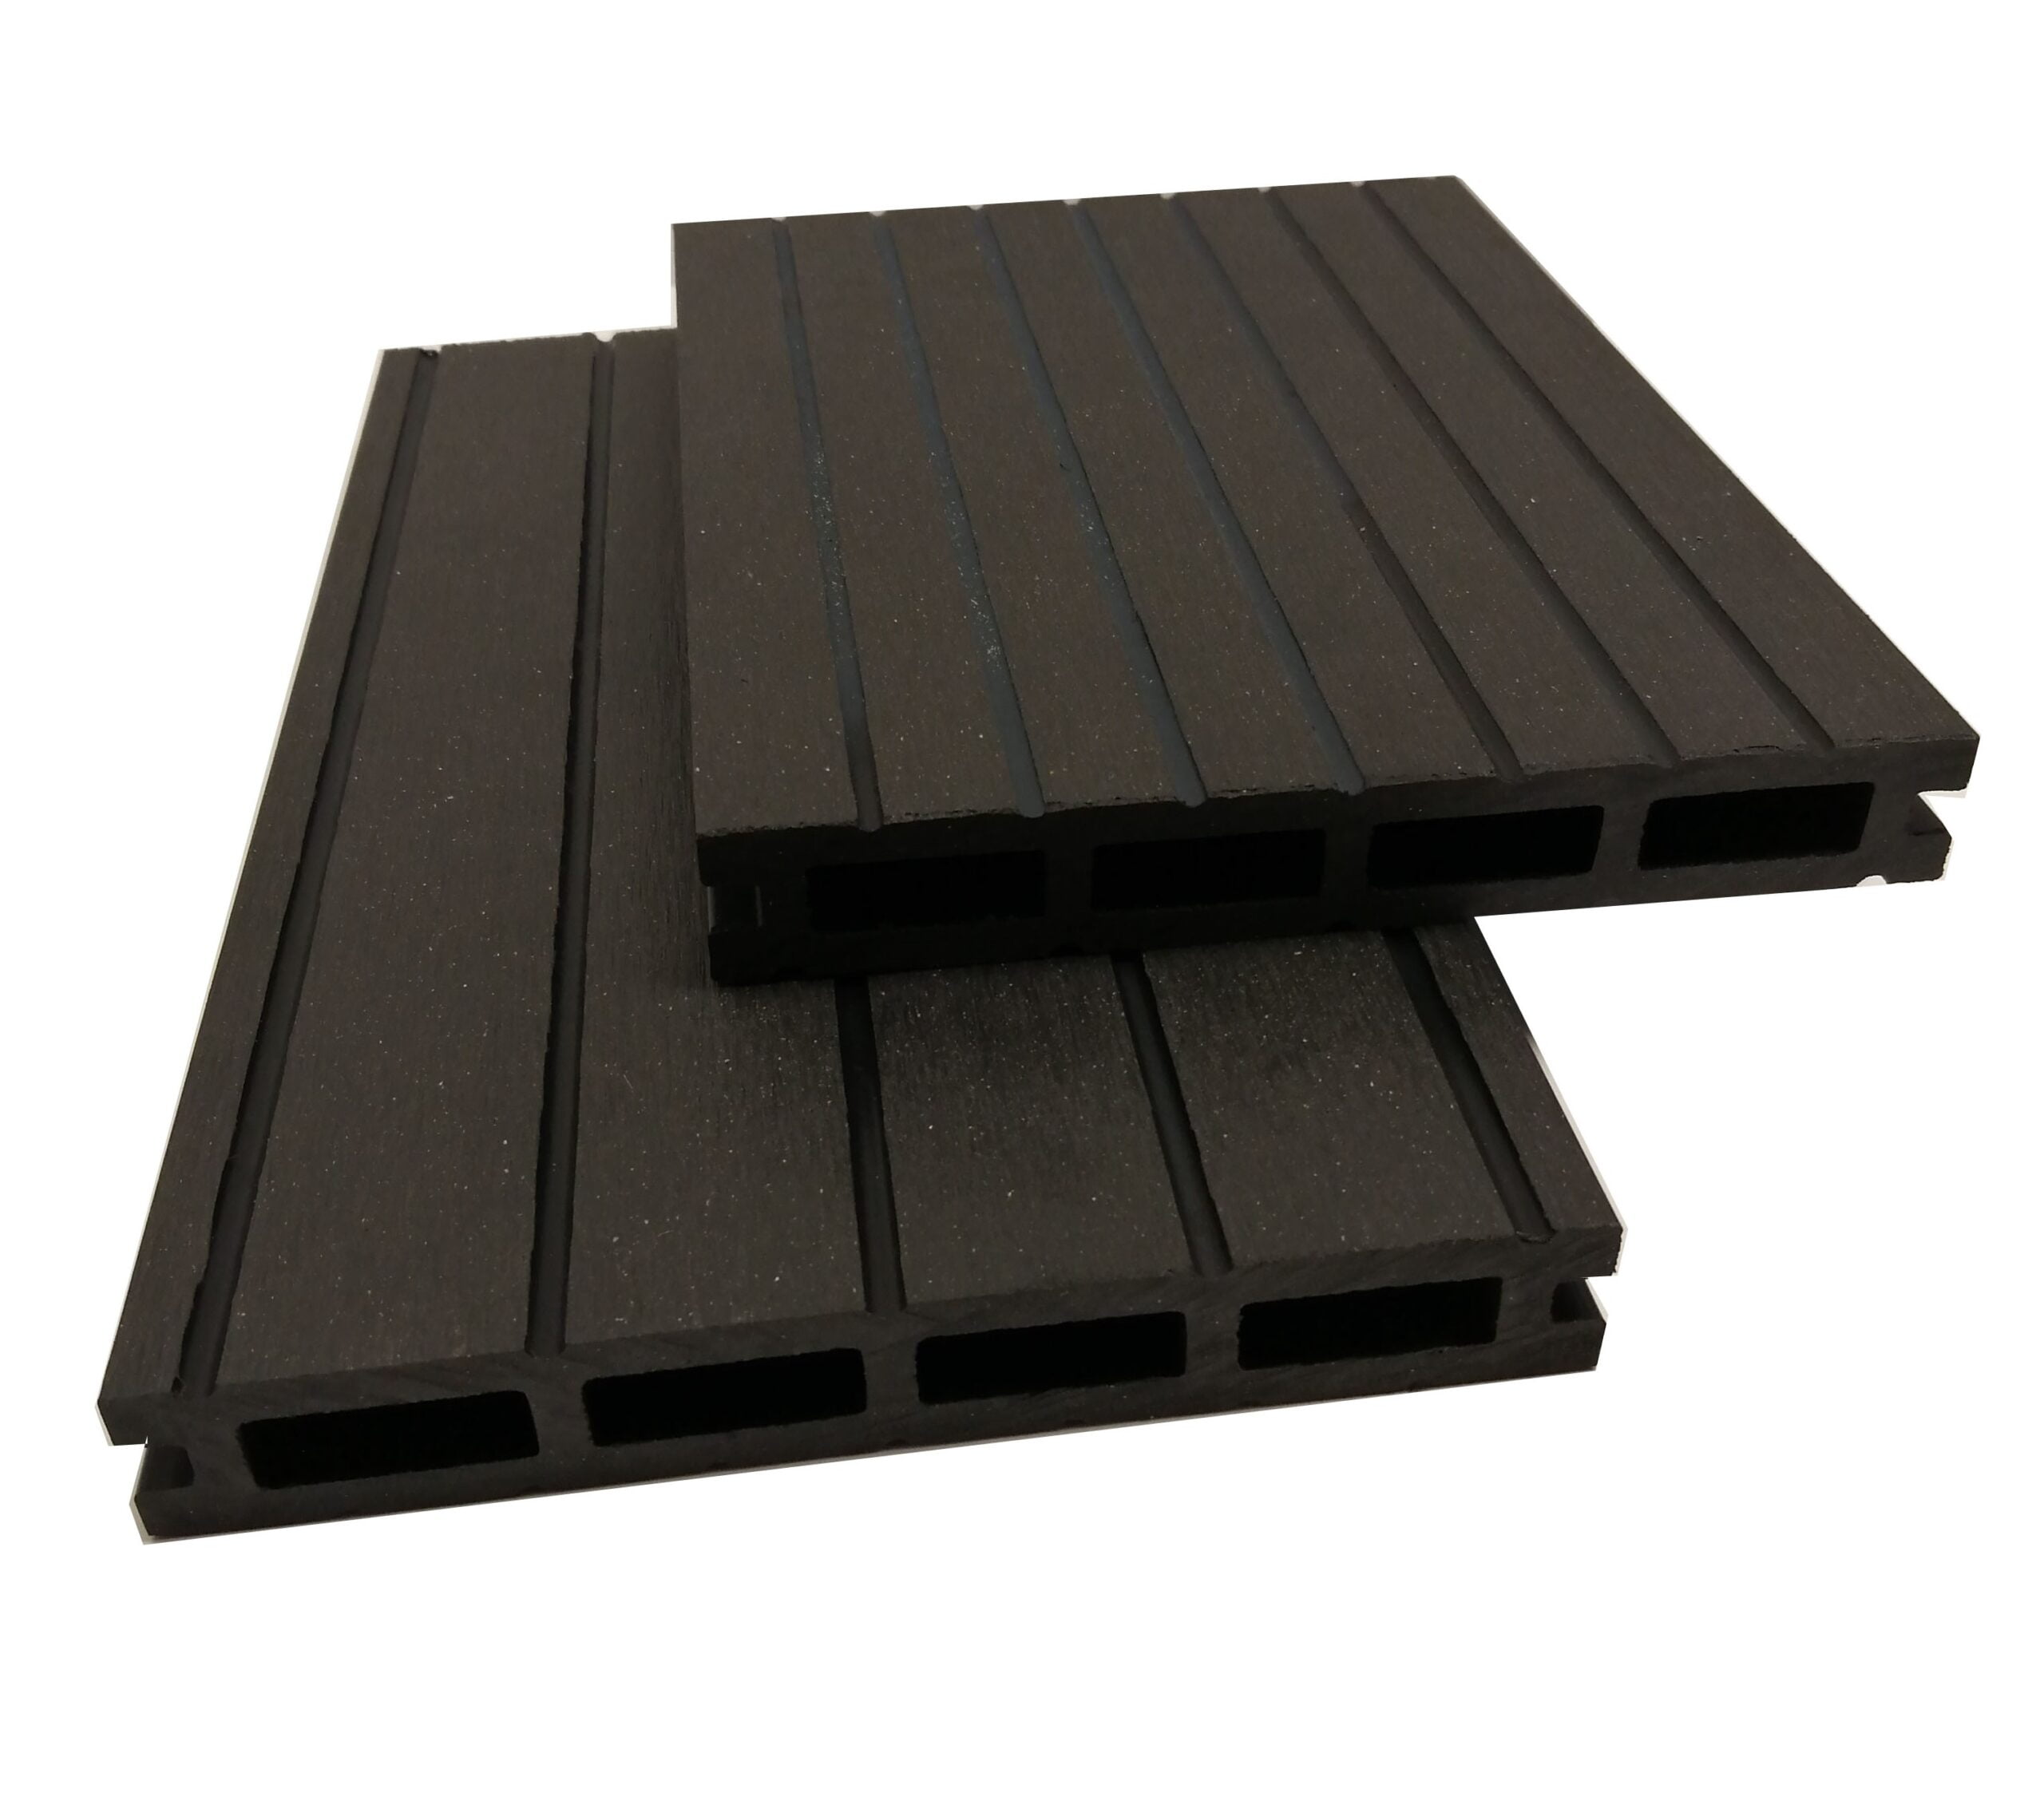 DuoGroove charcoal wood plastic composite decking